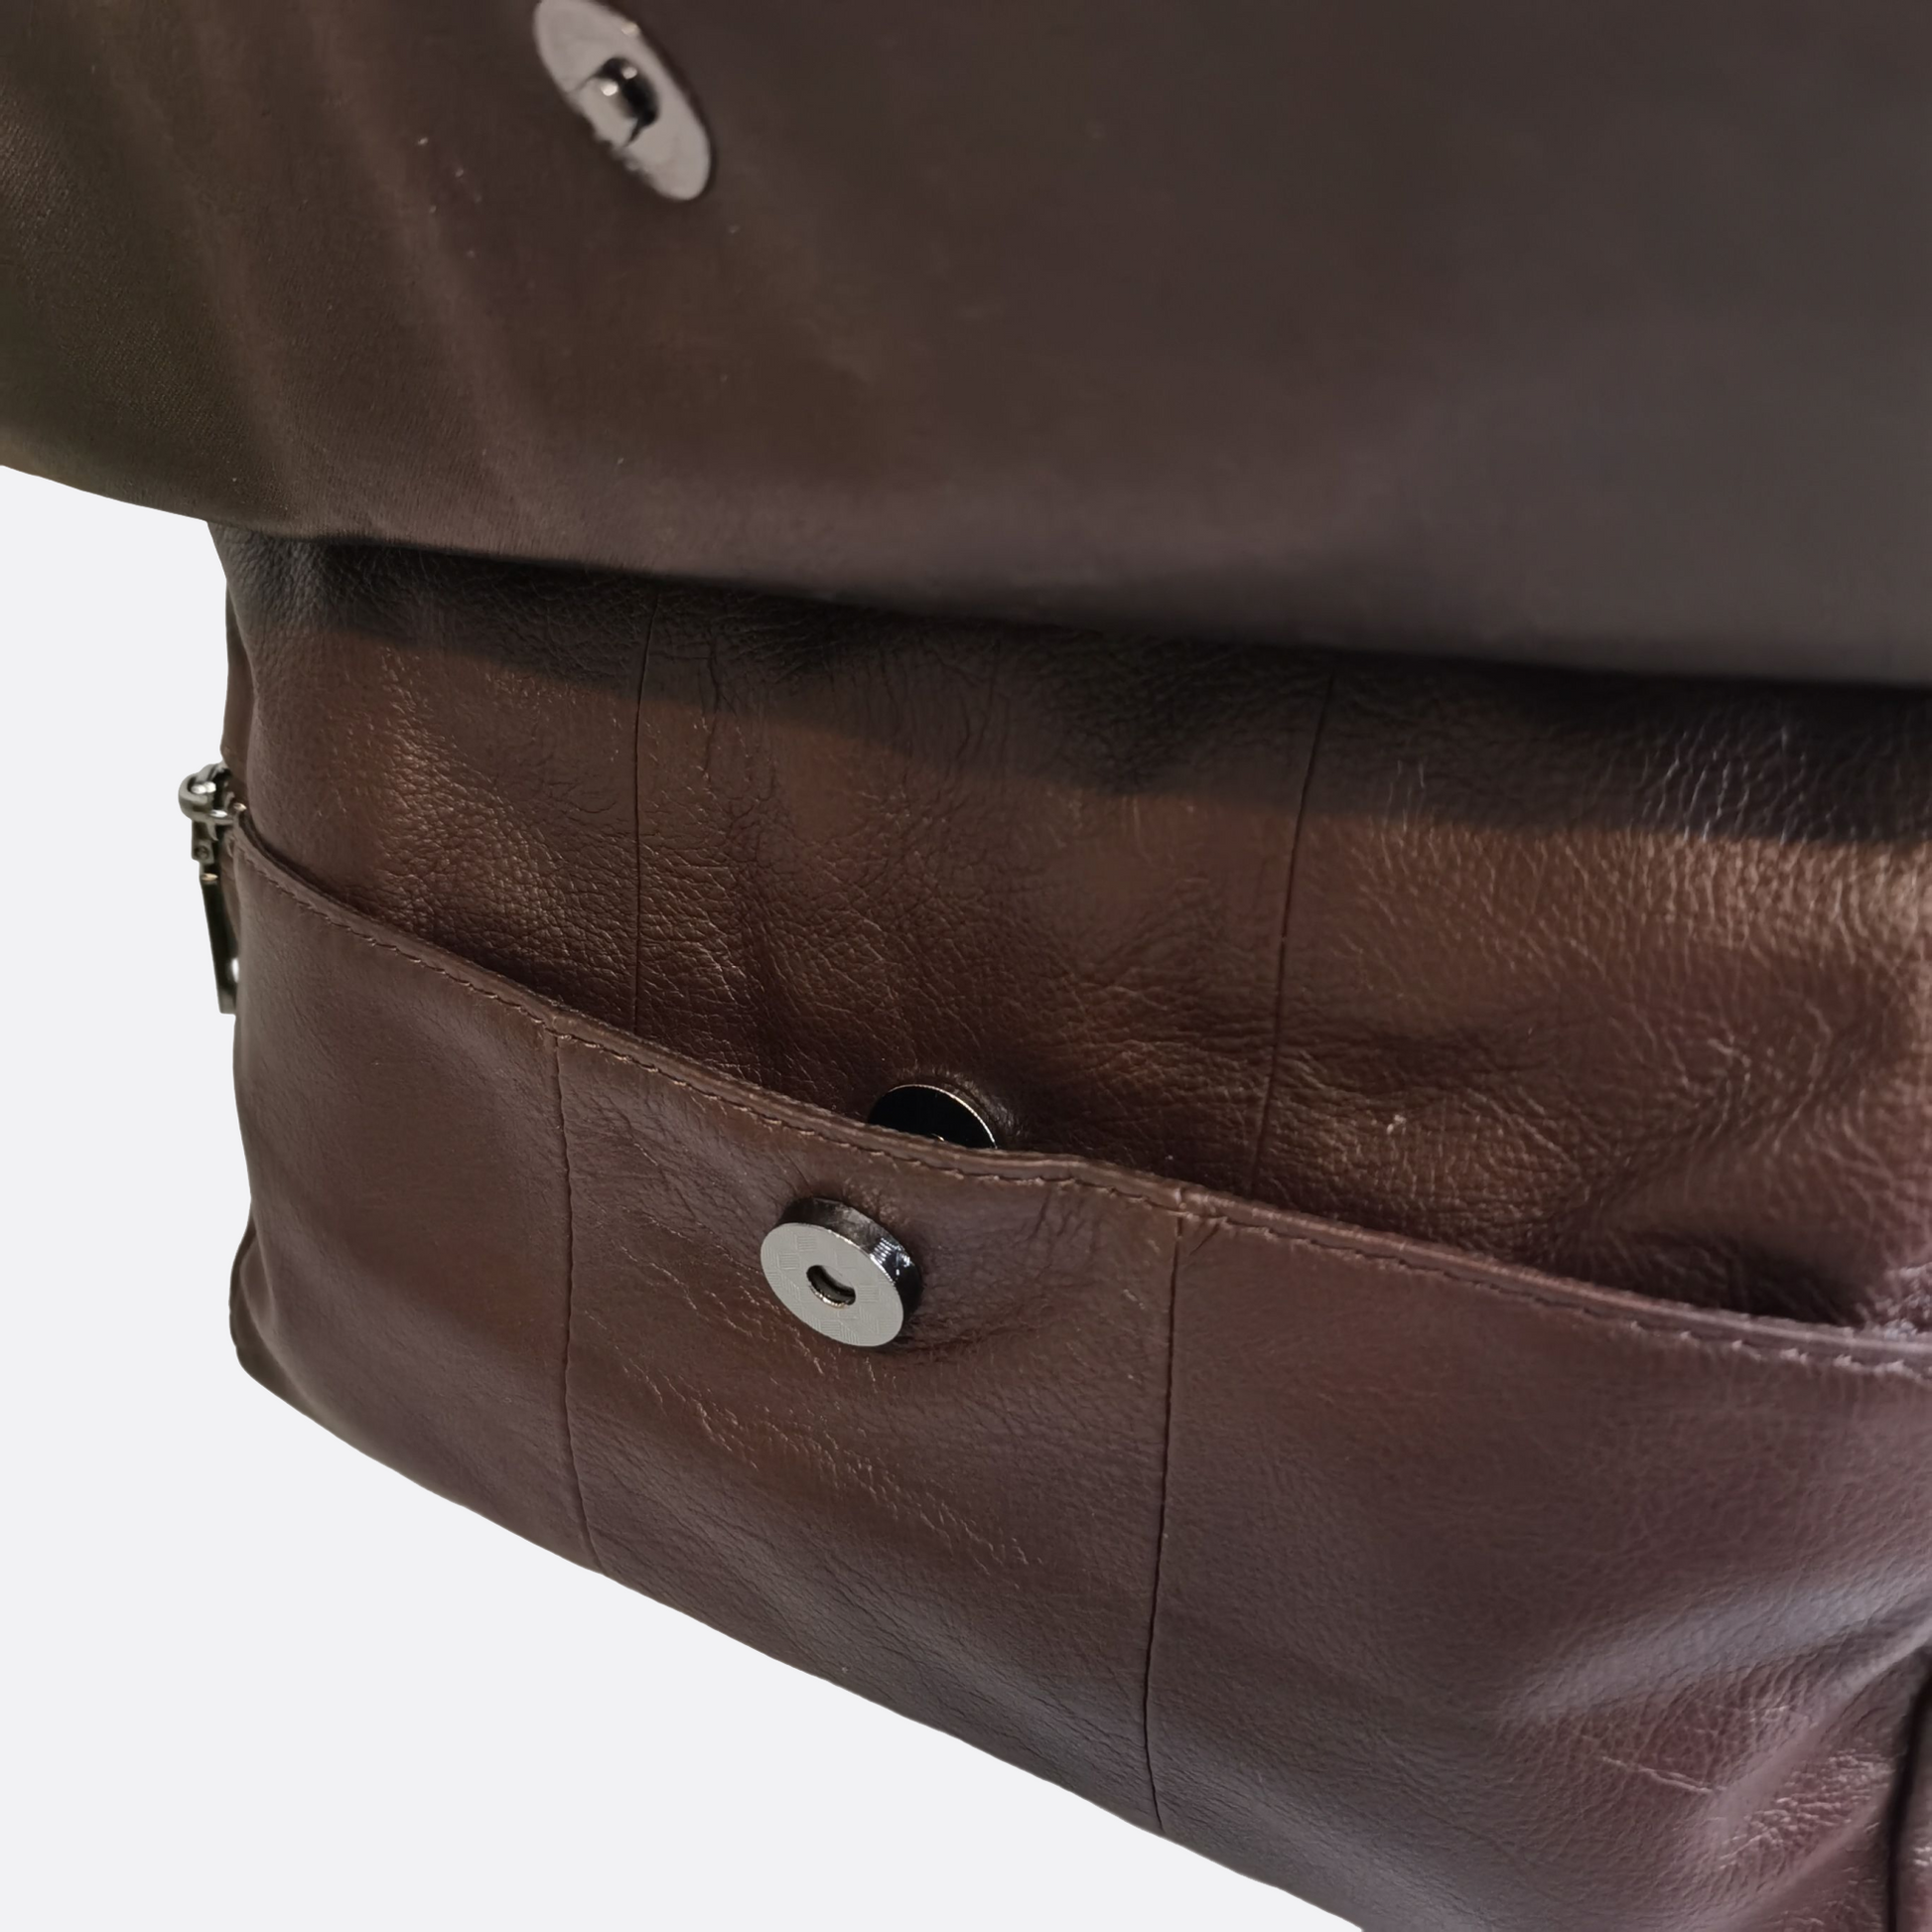 Women's genuine cowhide leather handbag rita design by Tomorrow Closet